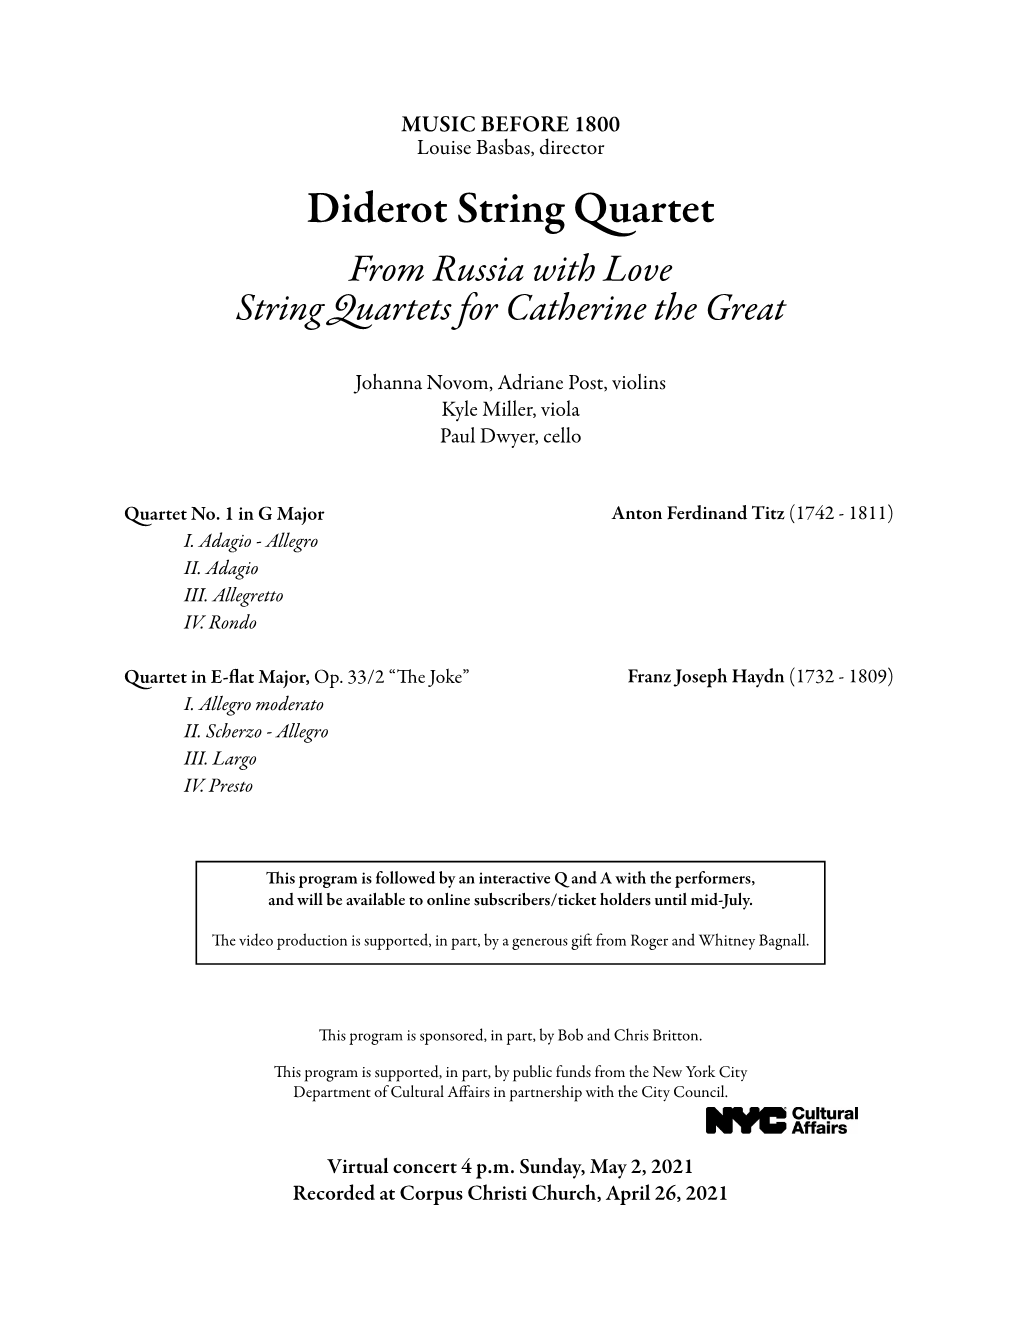 Diderot String Quartet Program